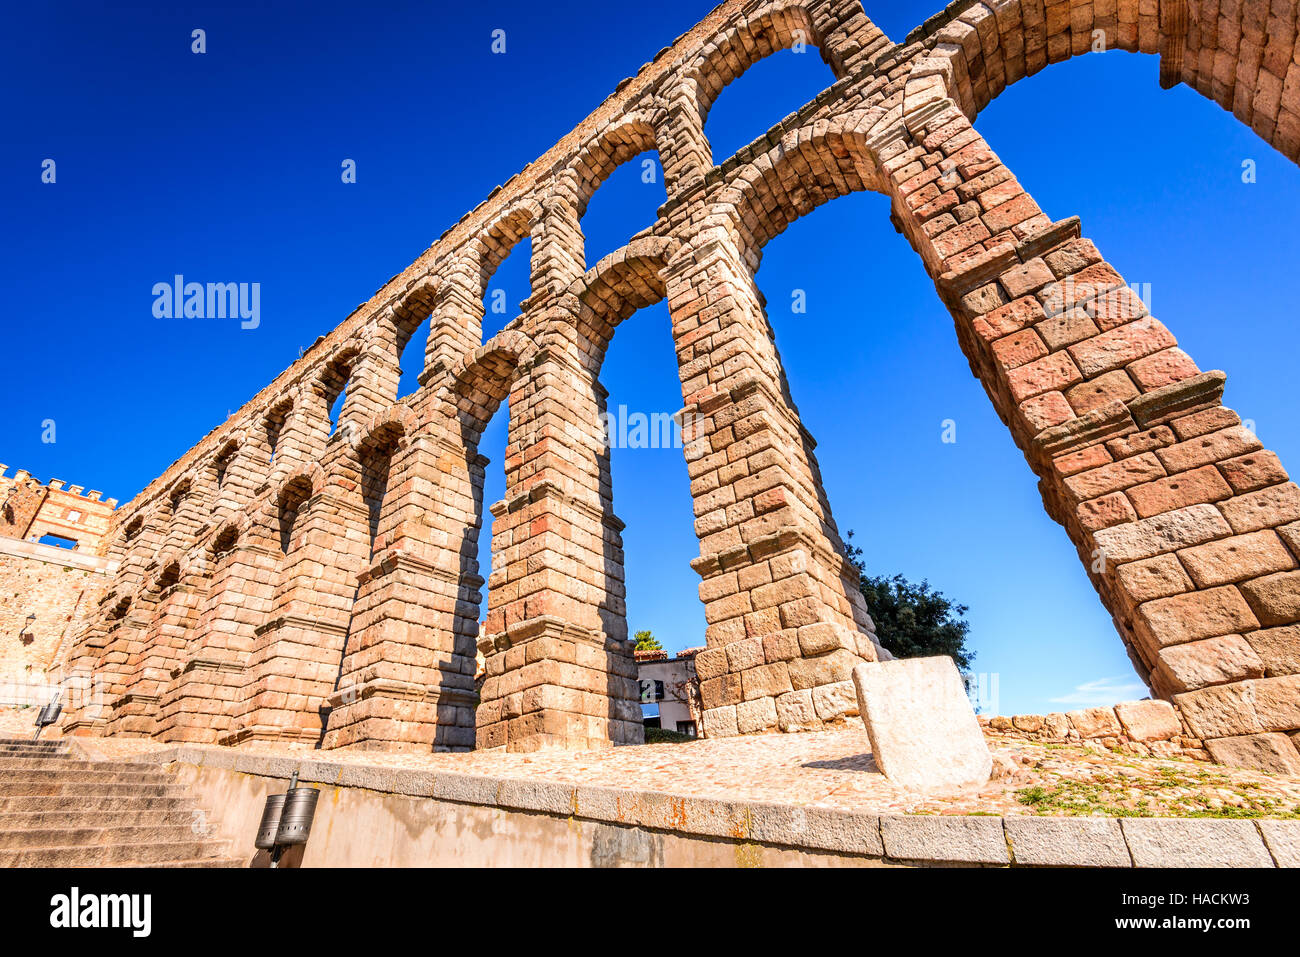 Segovia, Castilla y Leon. Roman aqueduct bridge of Segovia in Castile, Spain. Stock Photo